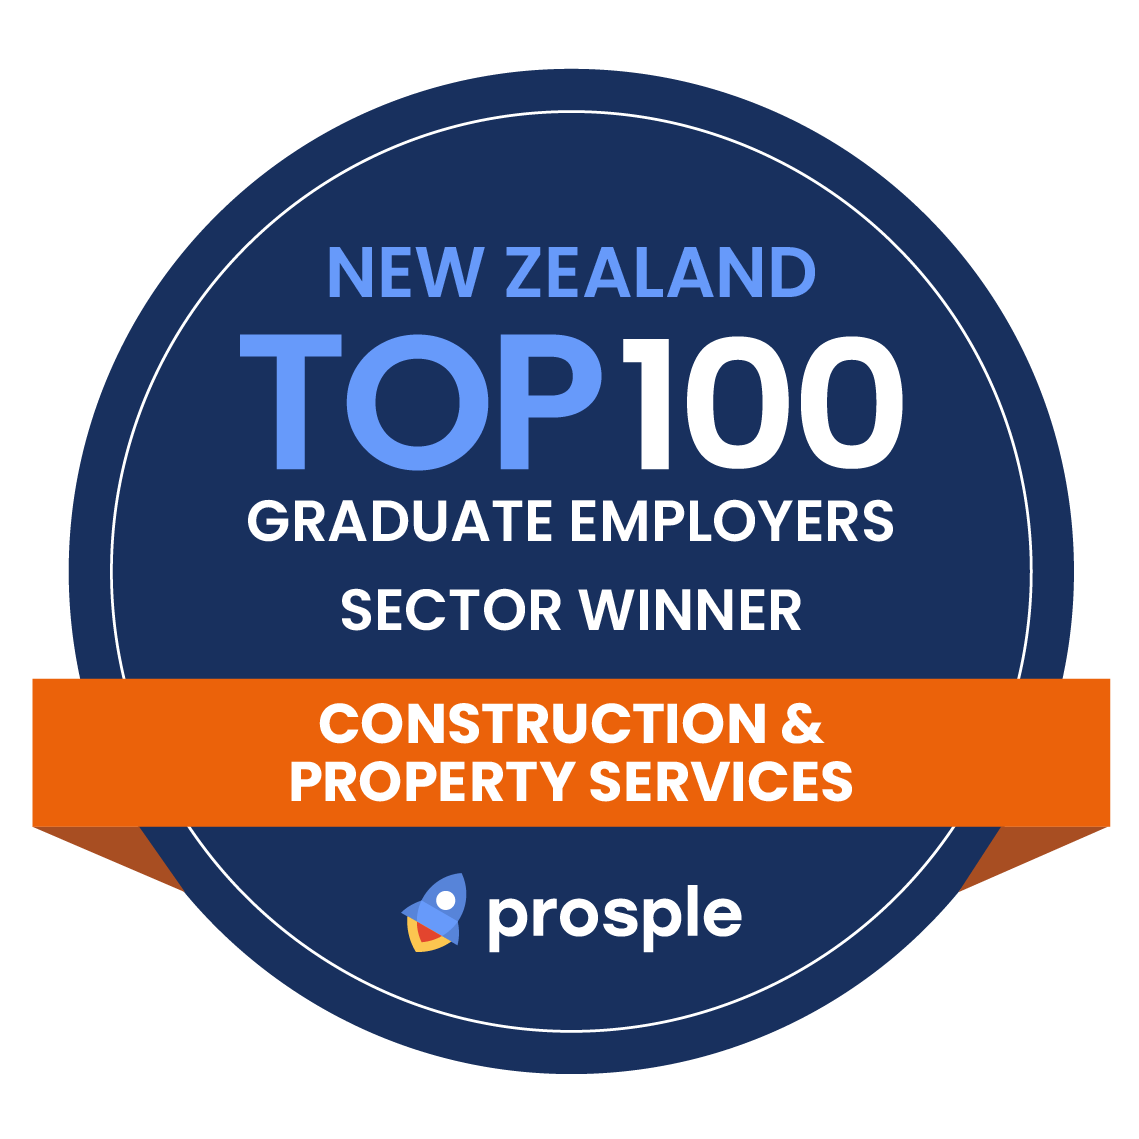 Prosple New Zealand Top 100 Graduate Employers Sector winner Construction & Property Services